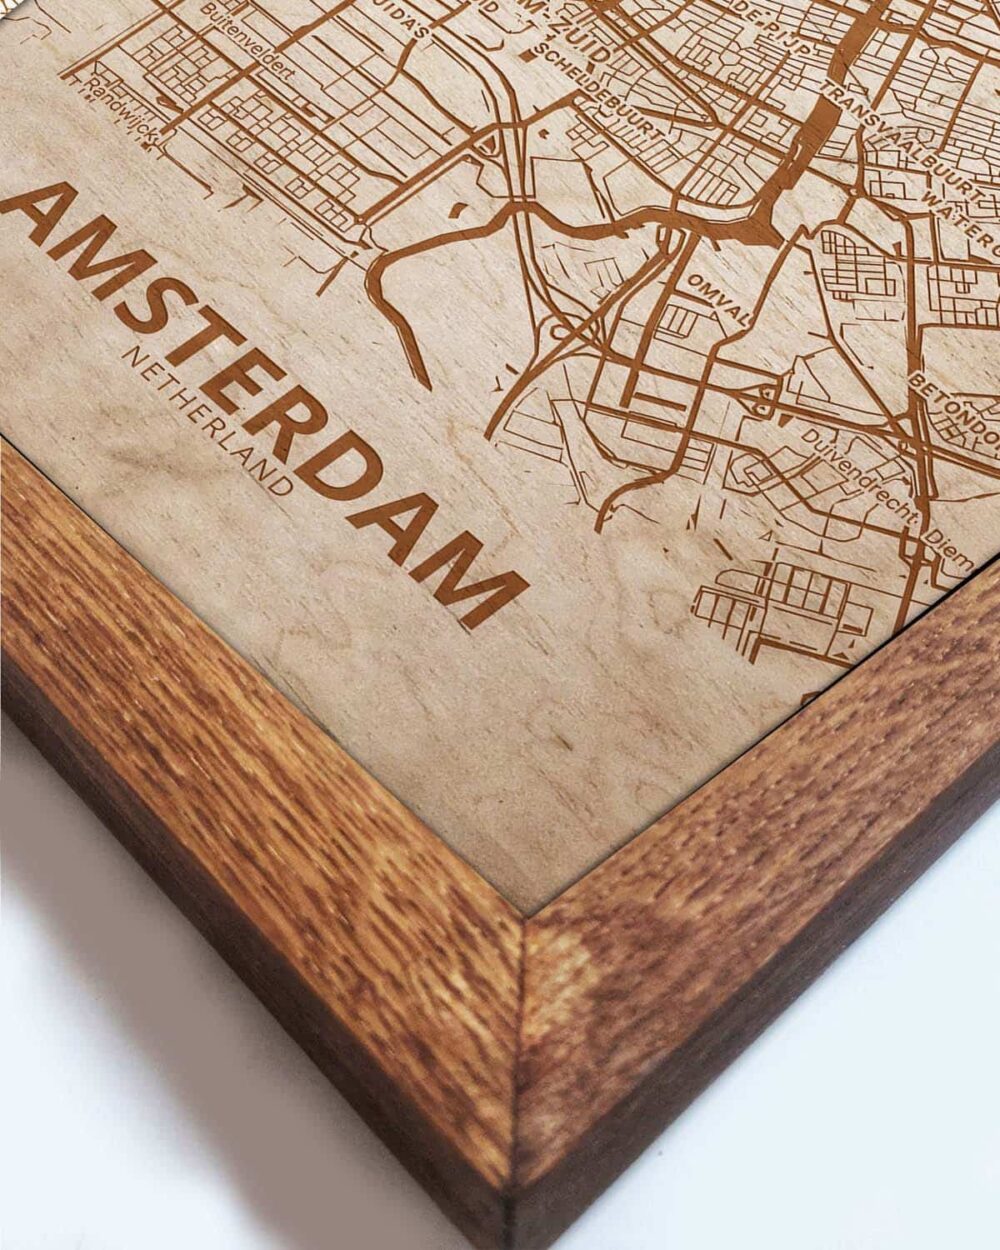 Wooden Street Map of Amsterdam - Urban City Plan 5